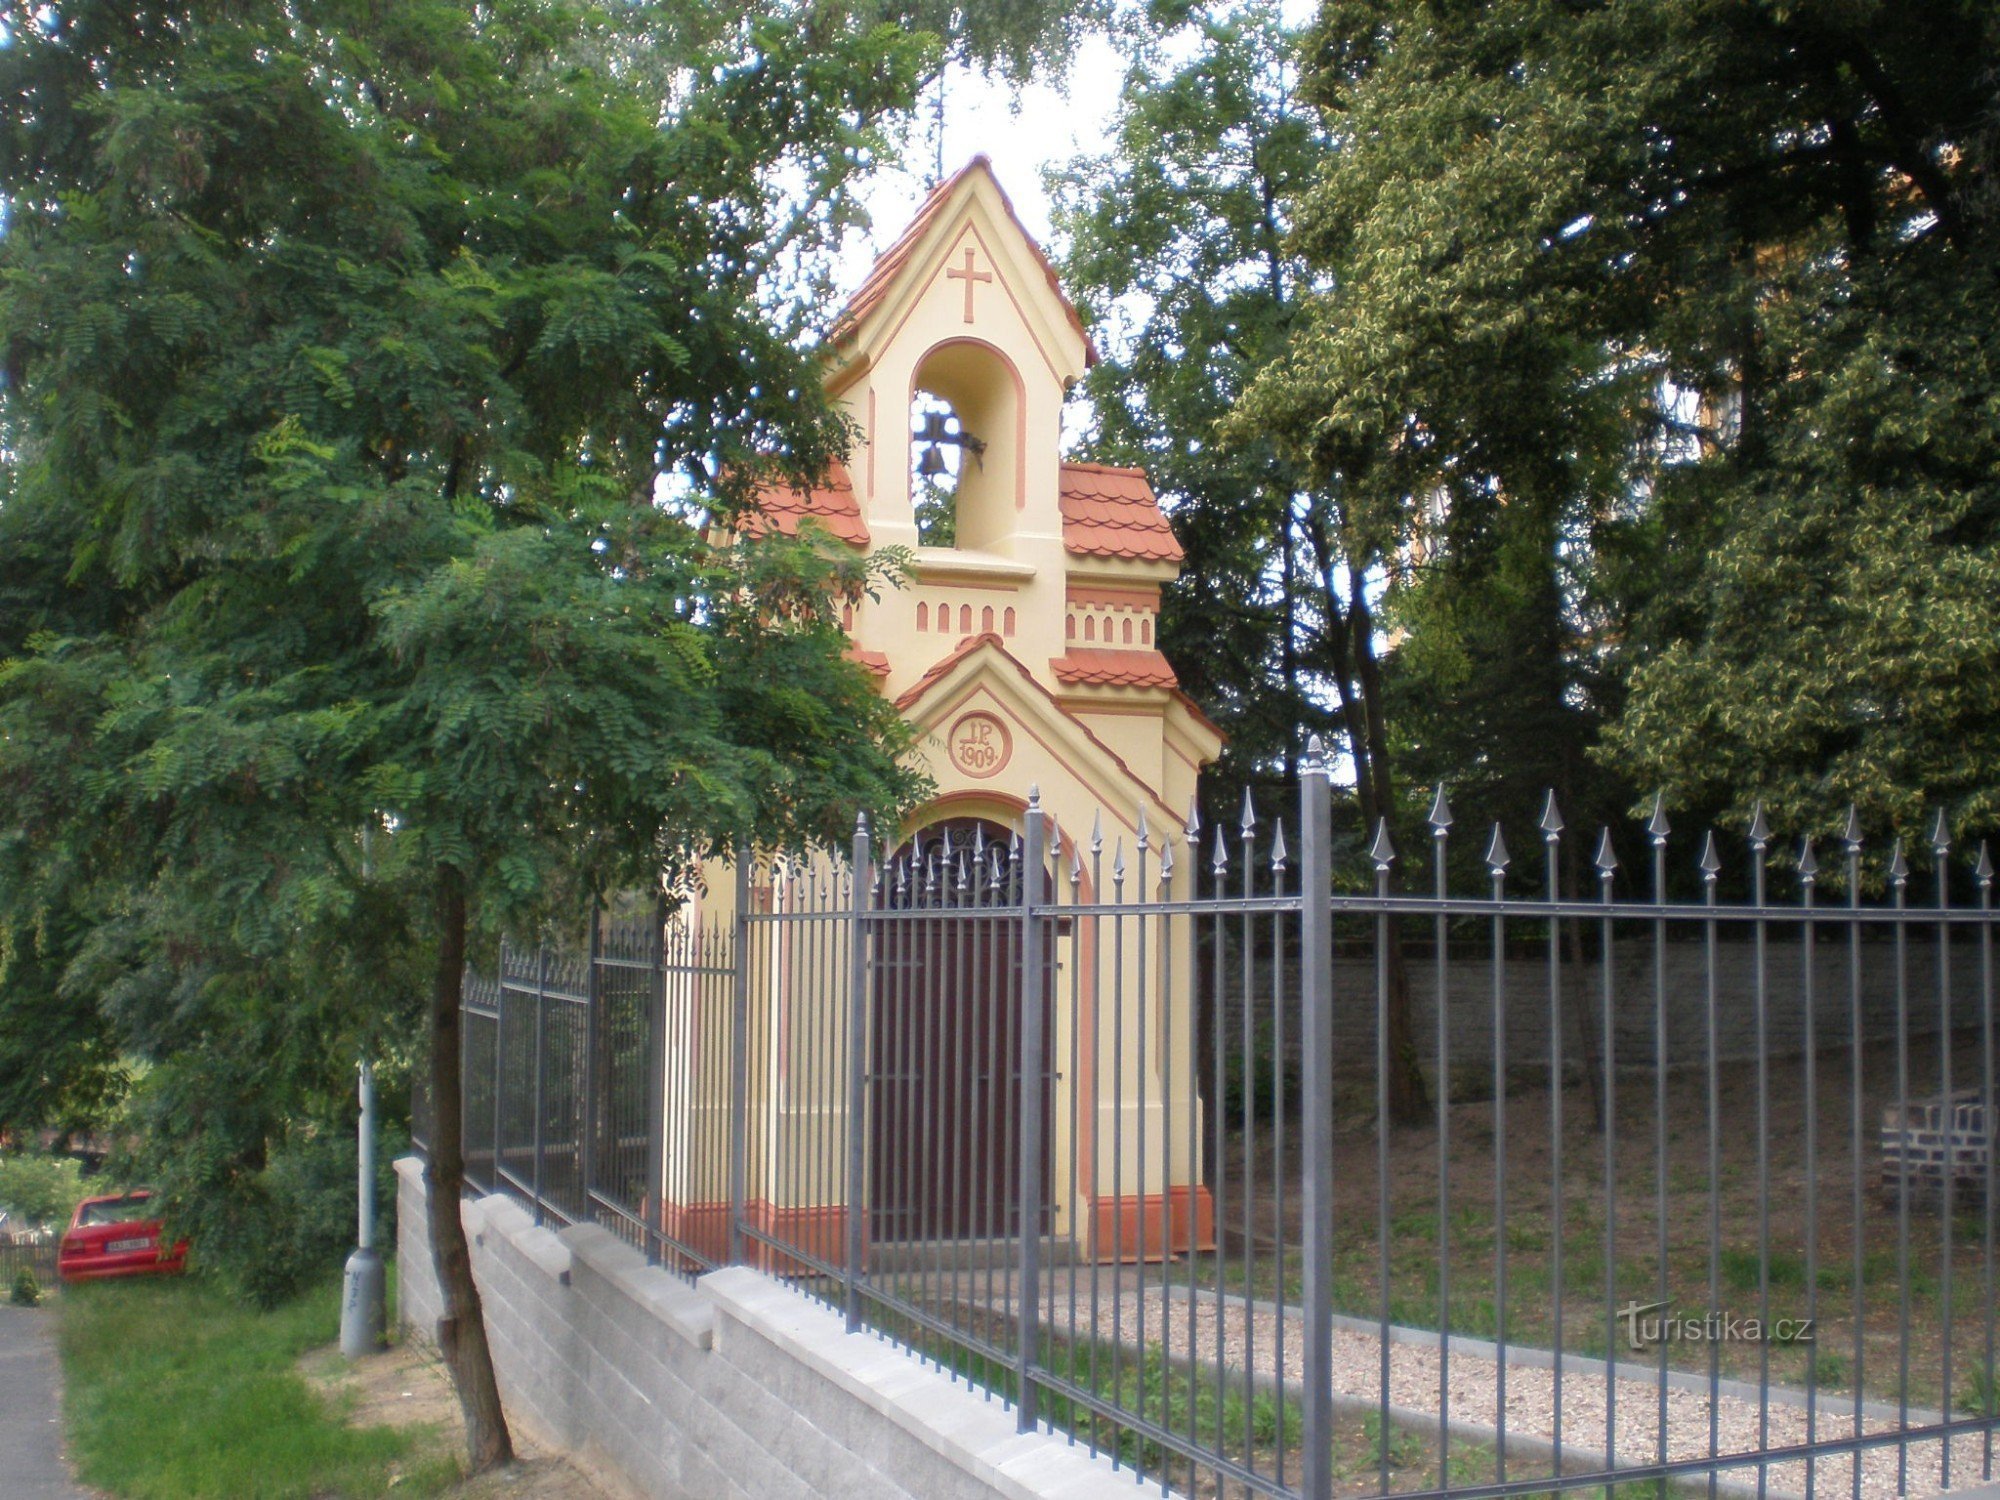 Střížkov - chapel